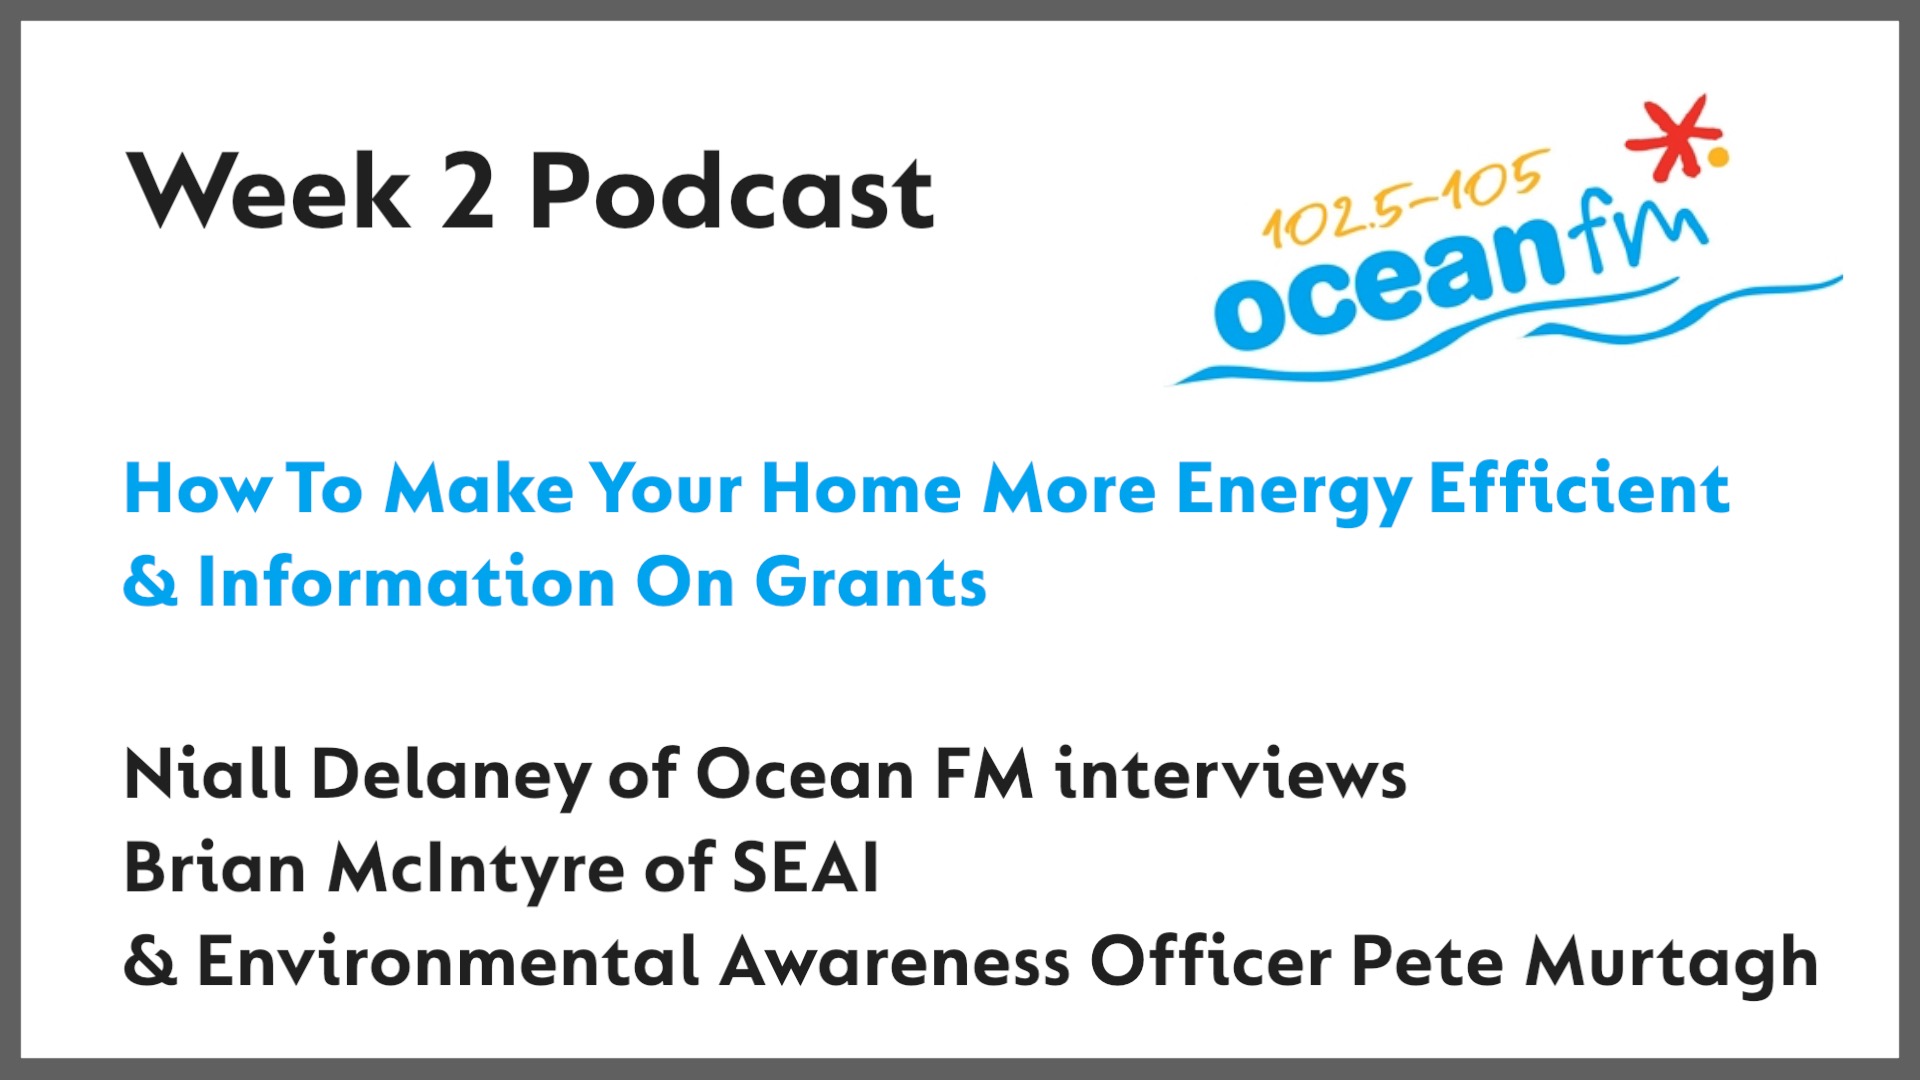 This week’s Green Aware Sligo interview on Ocean FM